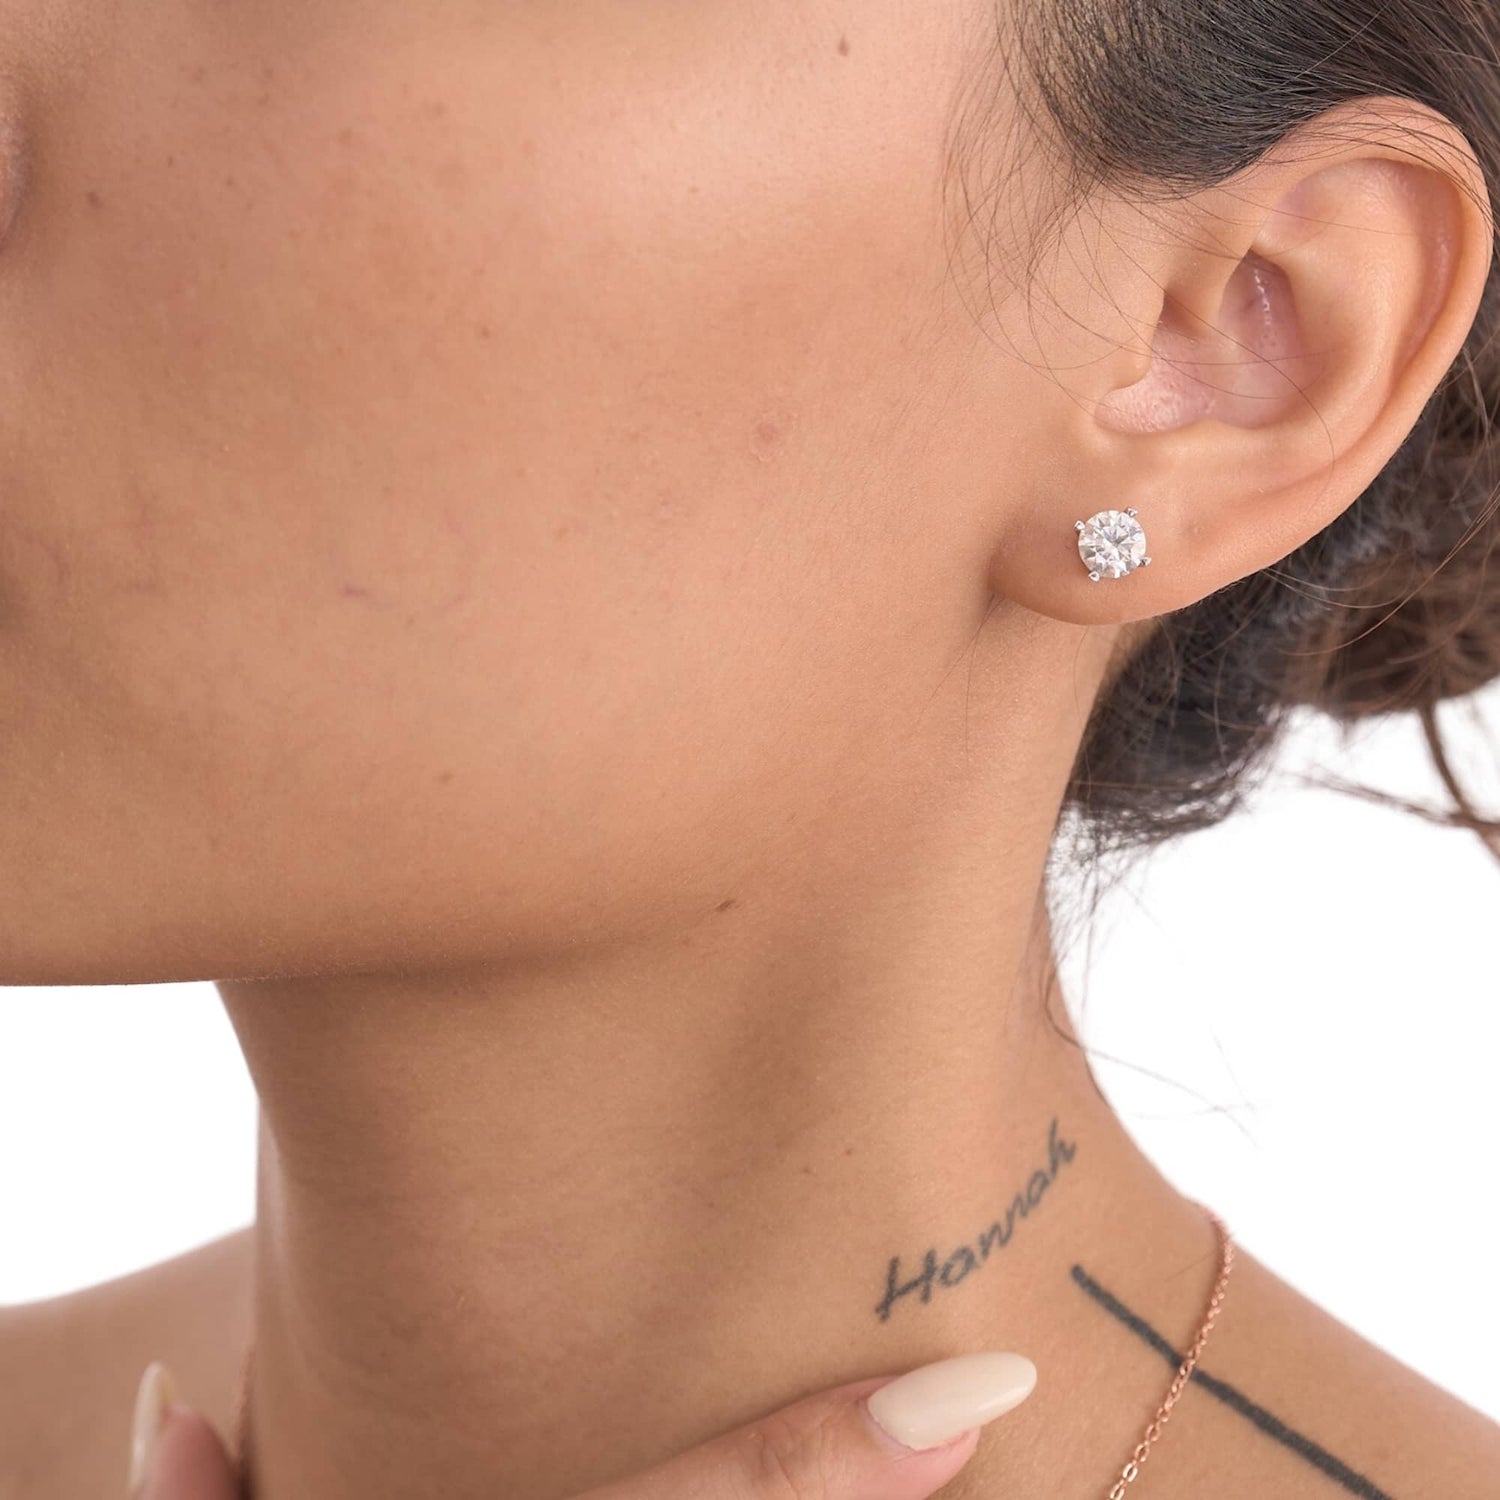 Model wearing the 1 carat moissanite stud earrings